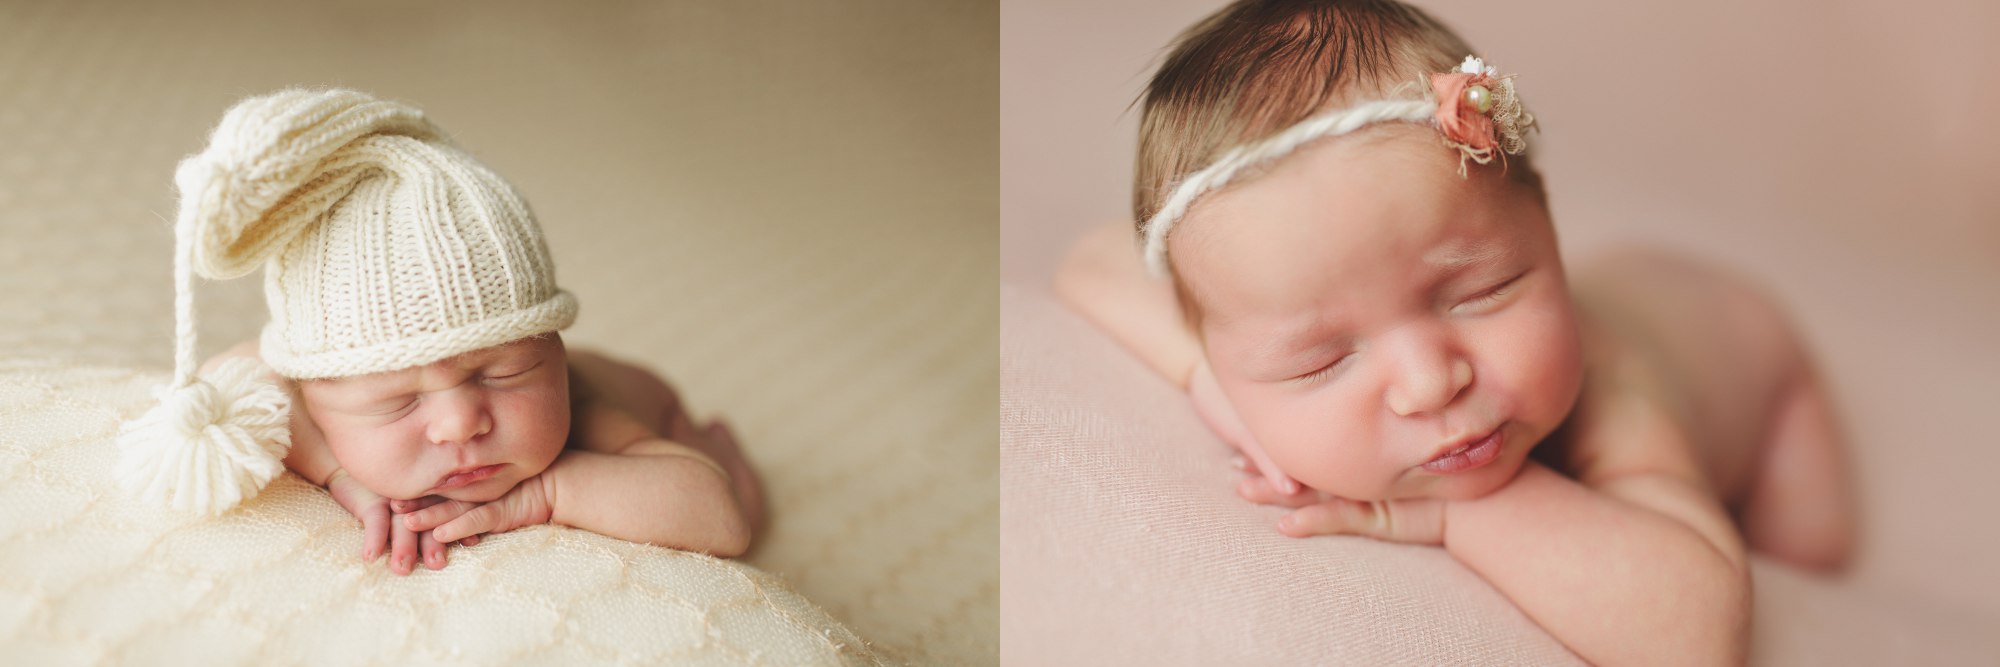 Newborn-Photography-Posing